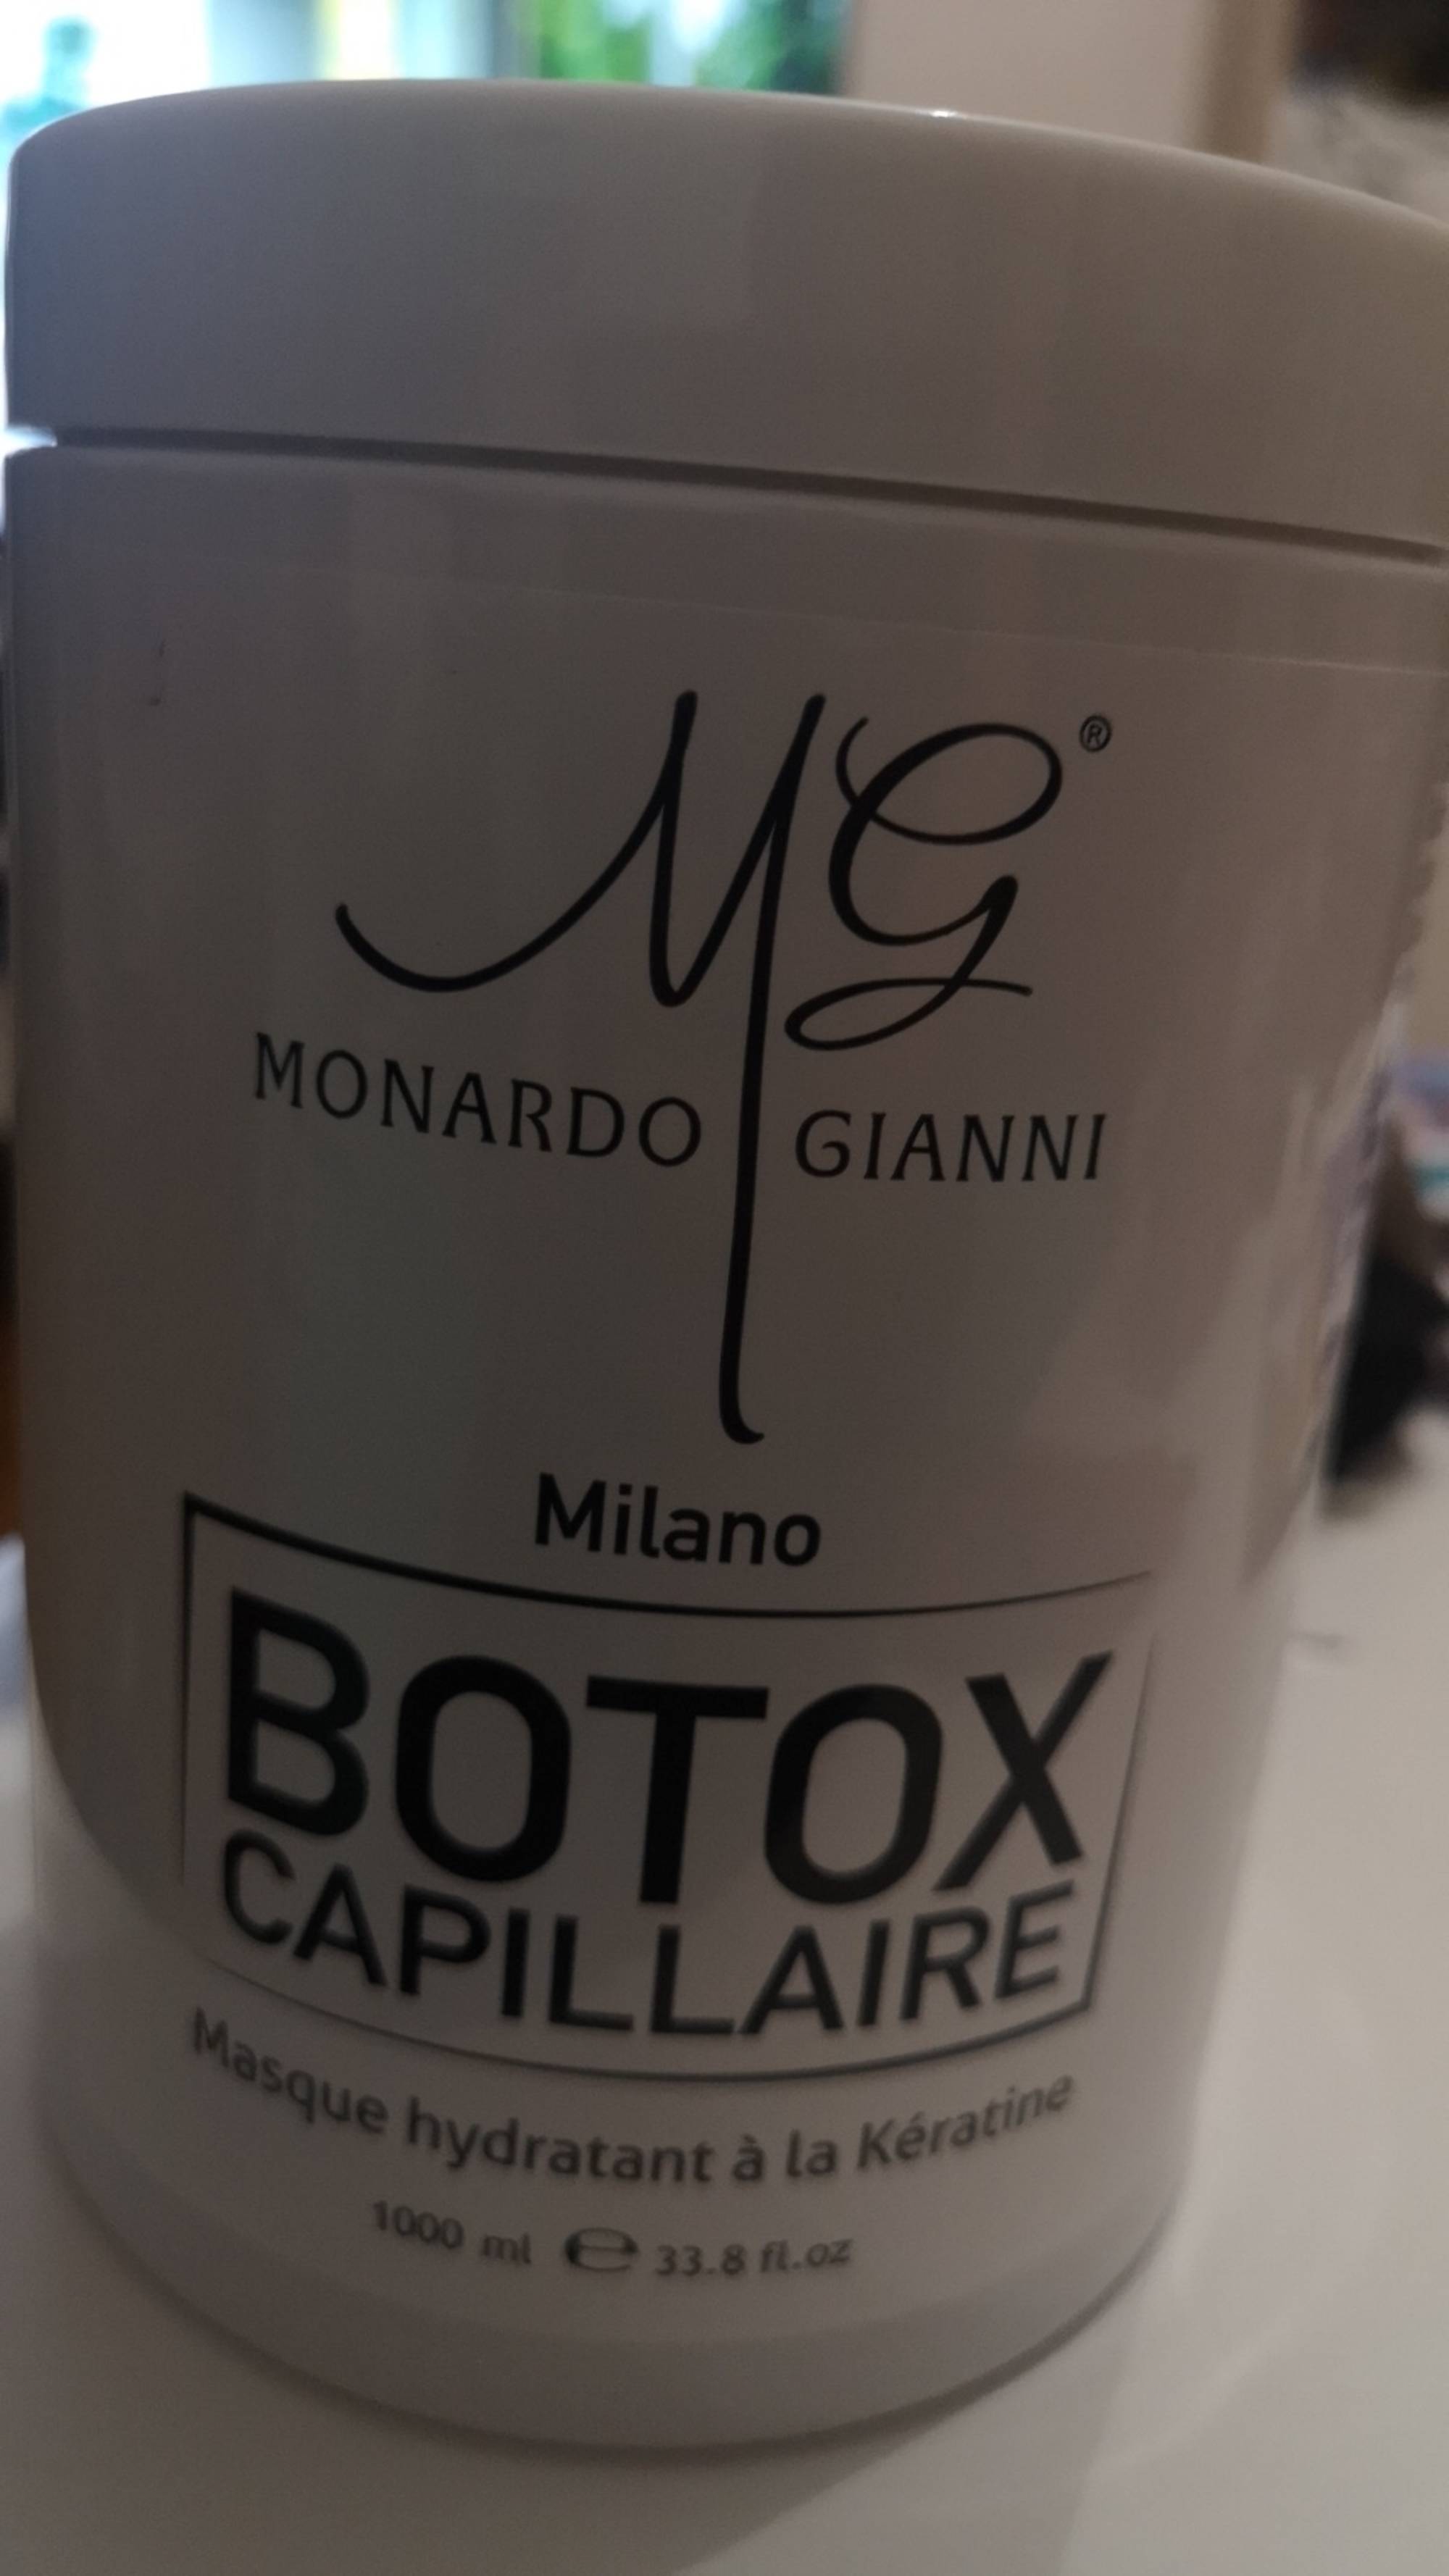 MONARDO GIANNI - Botox capillaire - Masque hydratant à la kératine